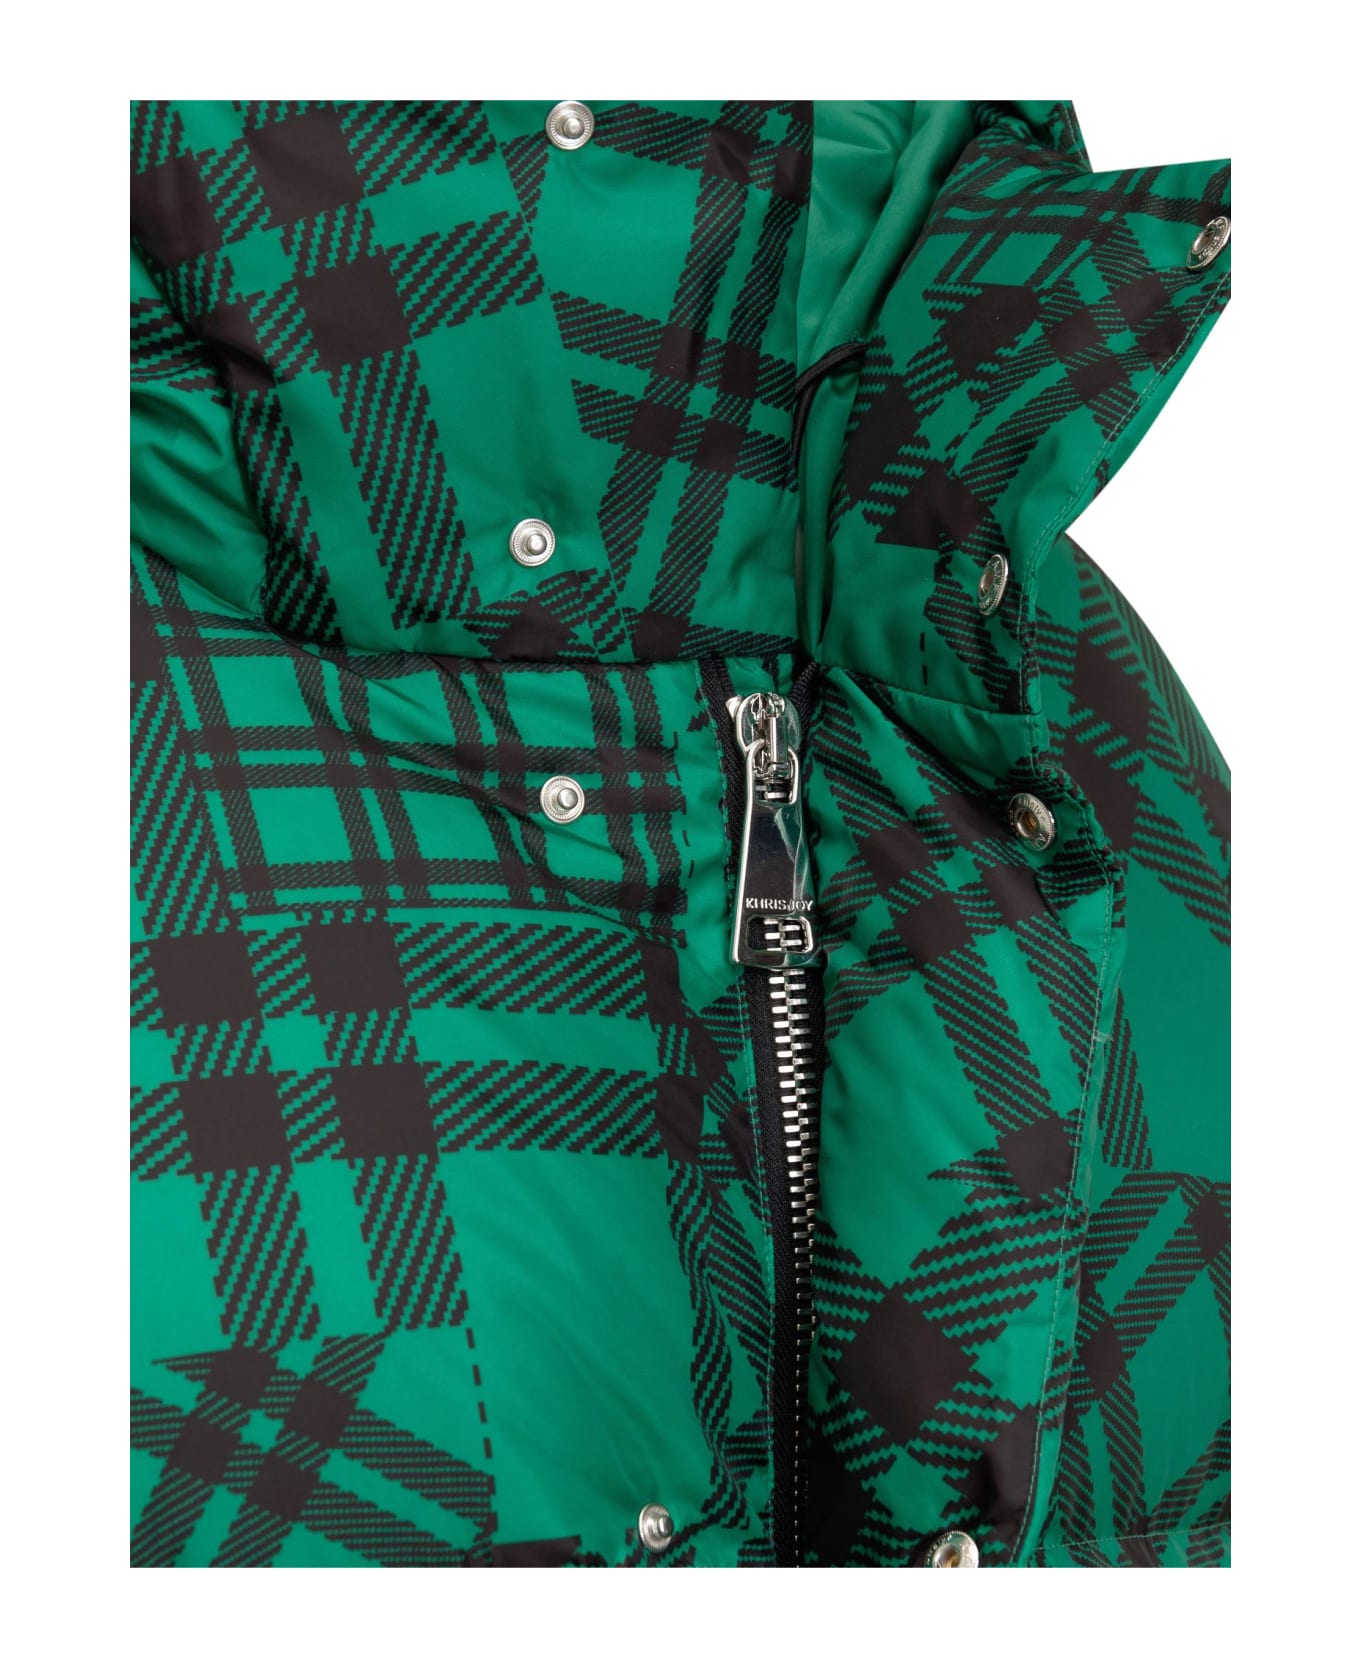 Khrisjoy Down Jacket With Hood - GREEN MULTI CHECK ダウンジャケット